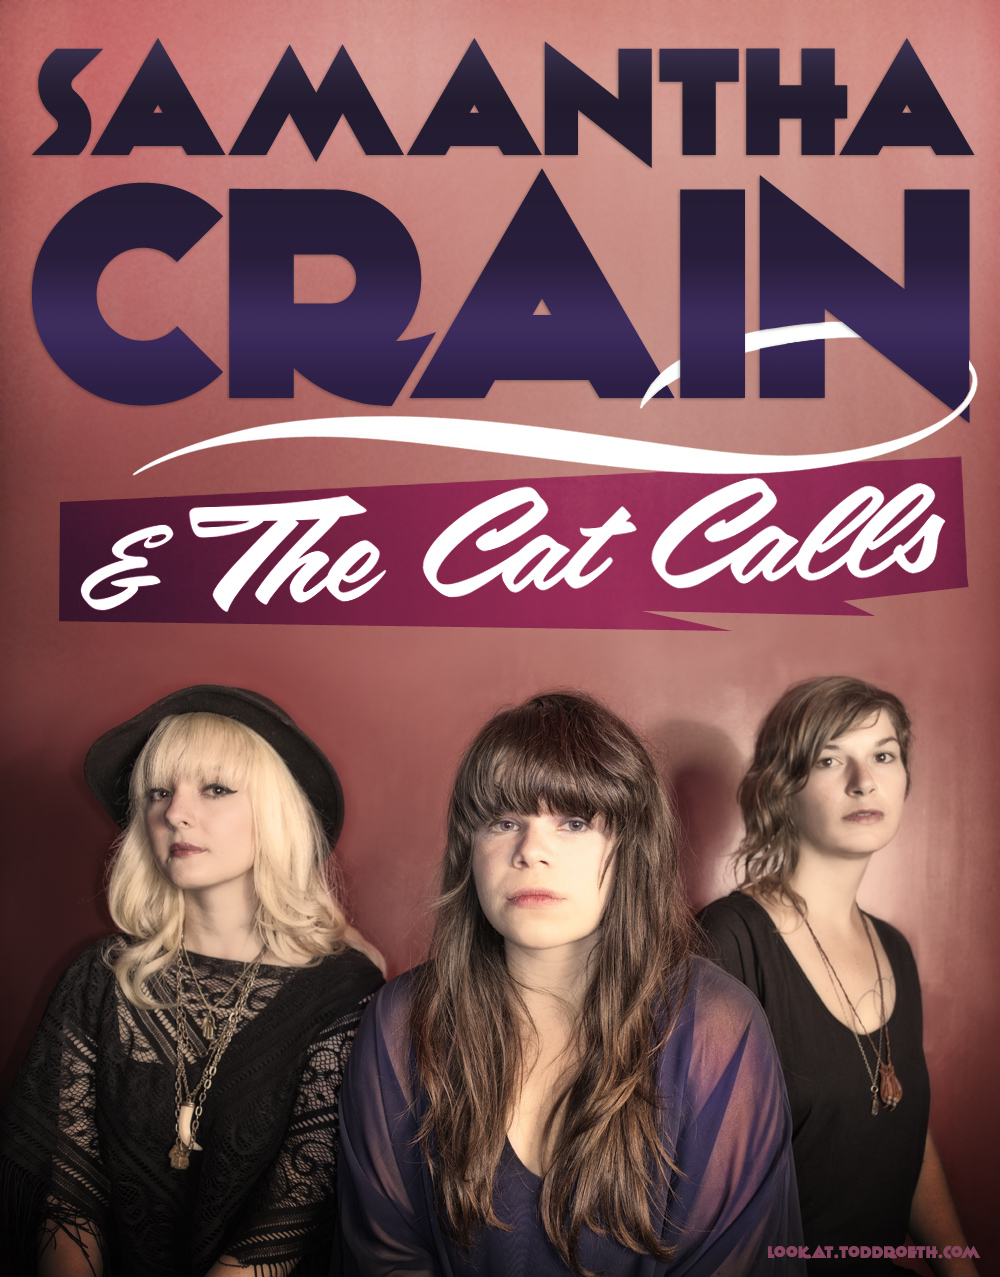 Samantha Crain & The Cat Calls - Photo by Todd Roeth